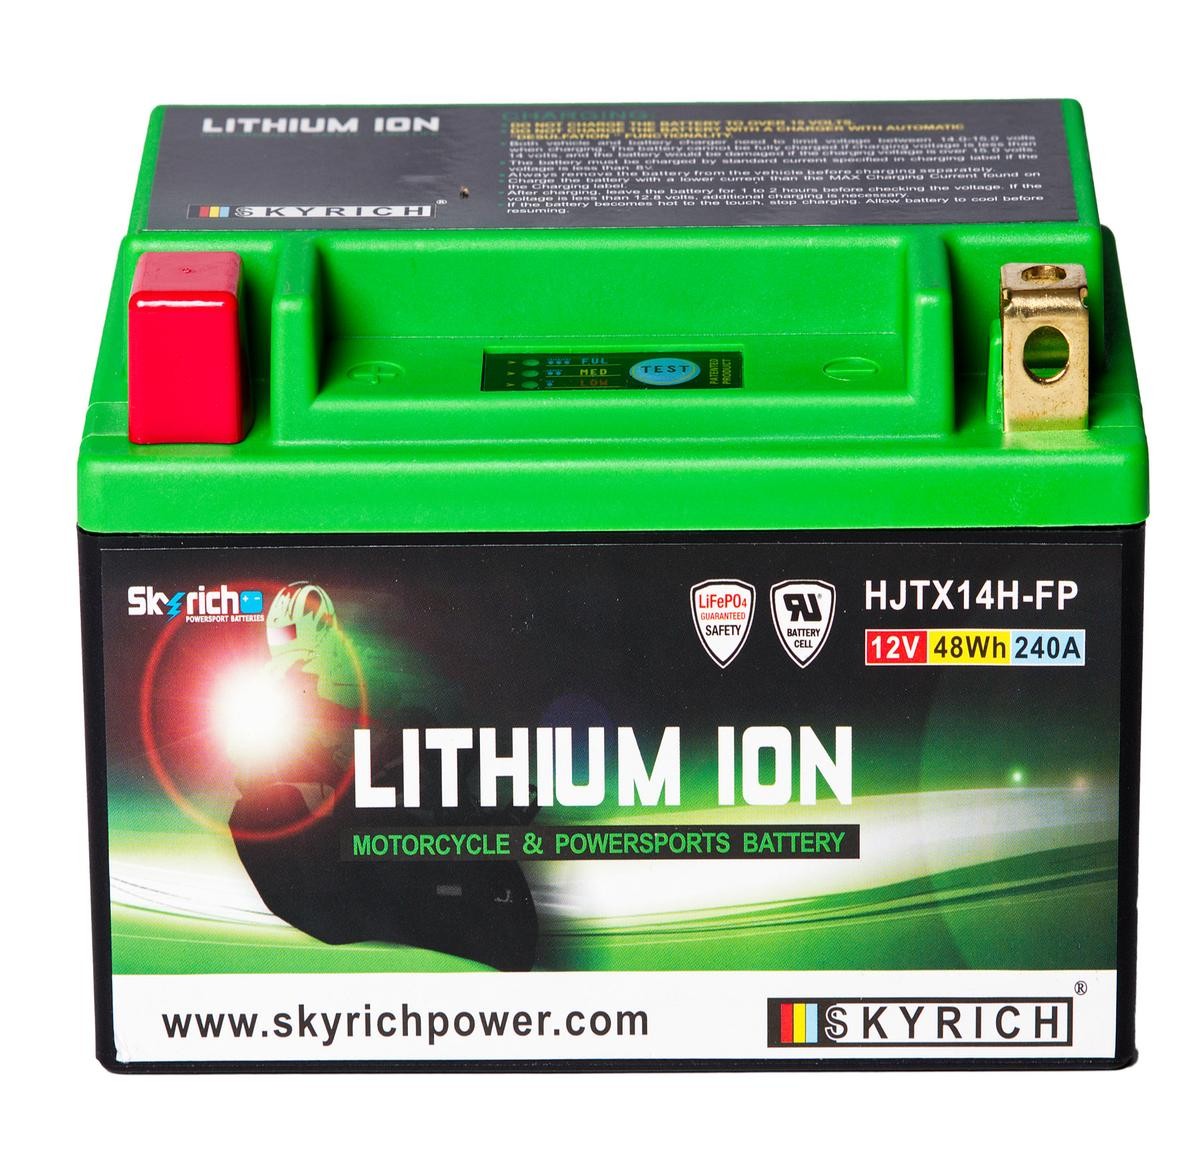 SKYRICH LITHIUM ION 12V 4Ah 240A N Li-Ion Battery Cold-test Current, EN: 240A, Voltage: 12V, Terminal Placement: 1 Starter battery HJTX14H-FP buy